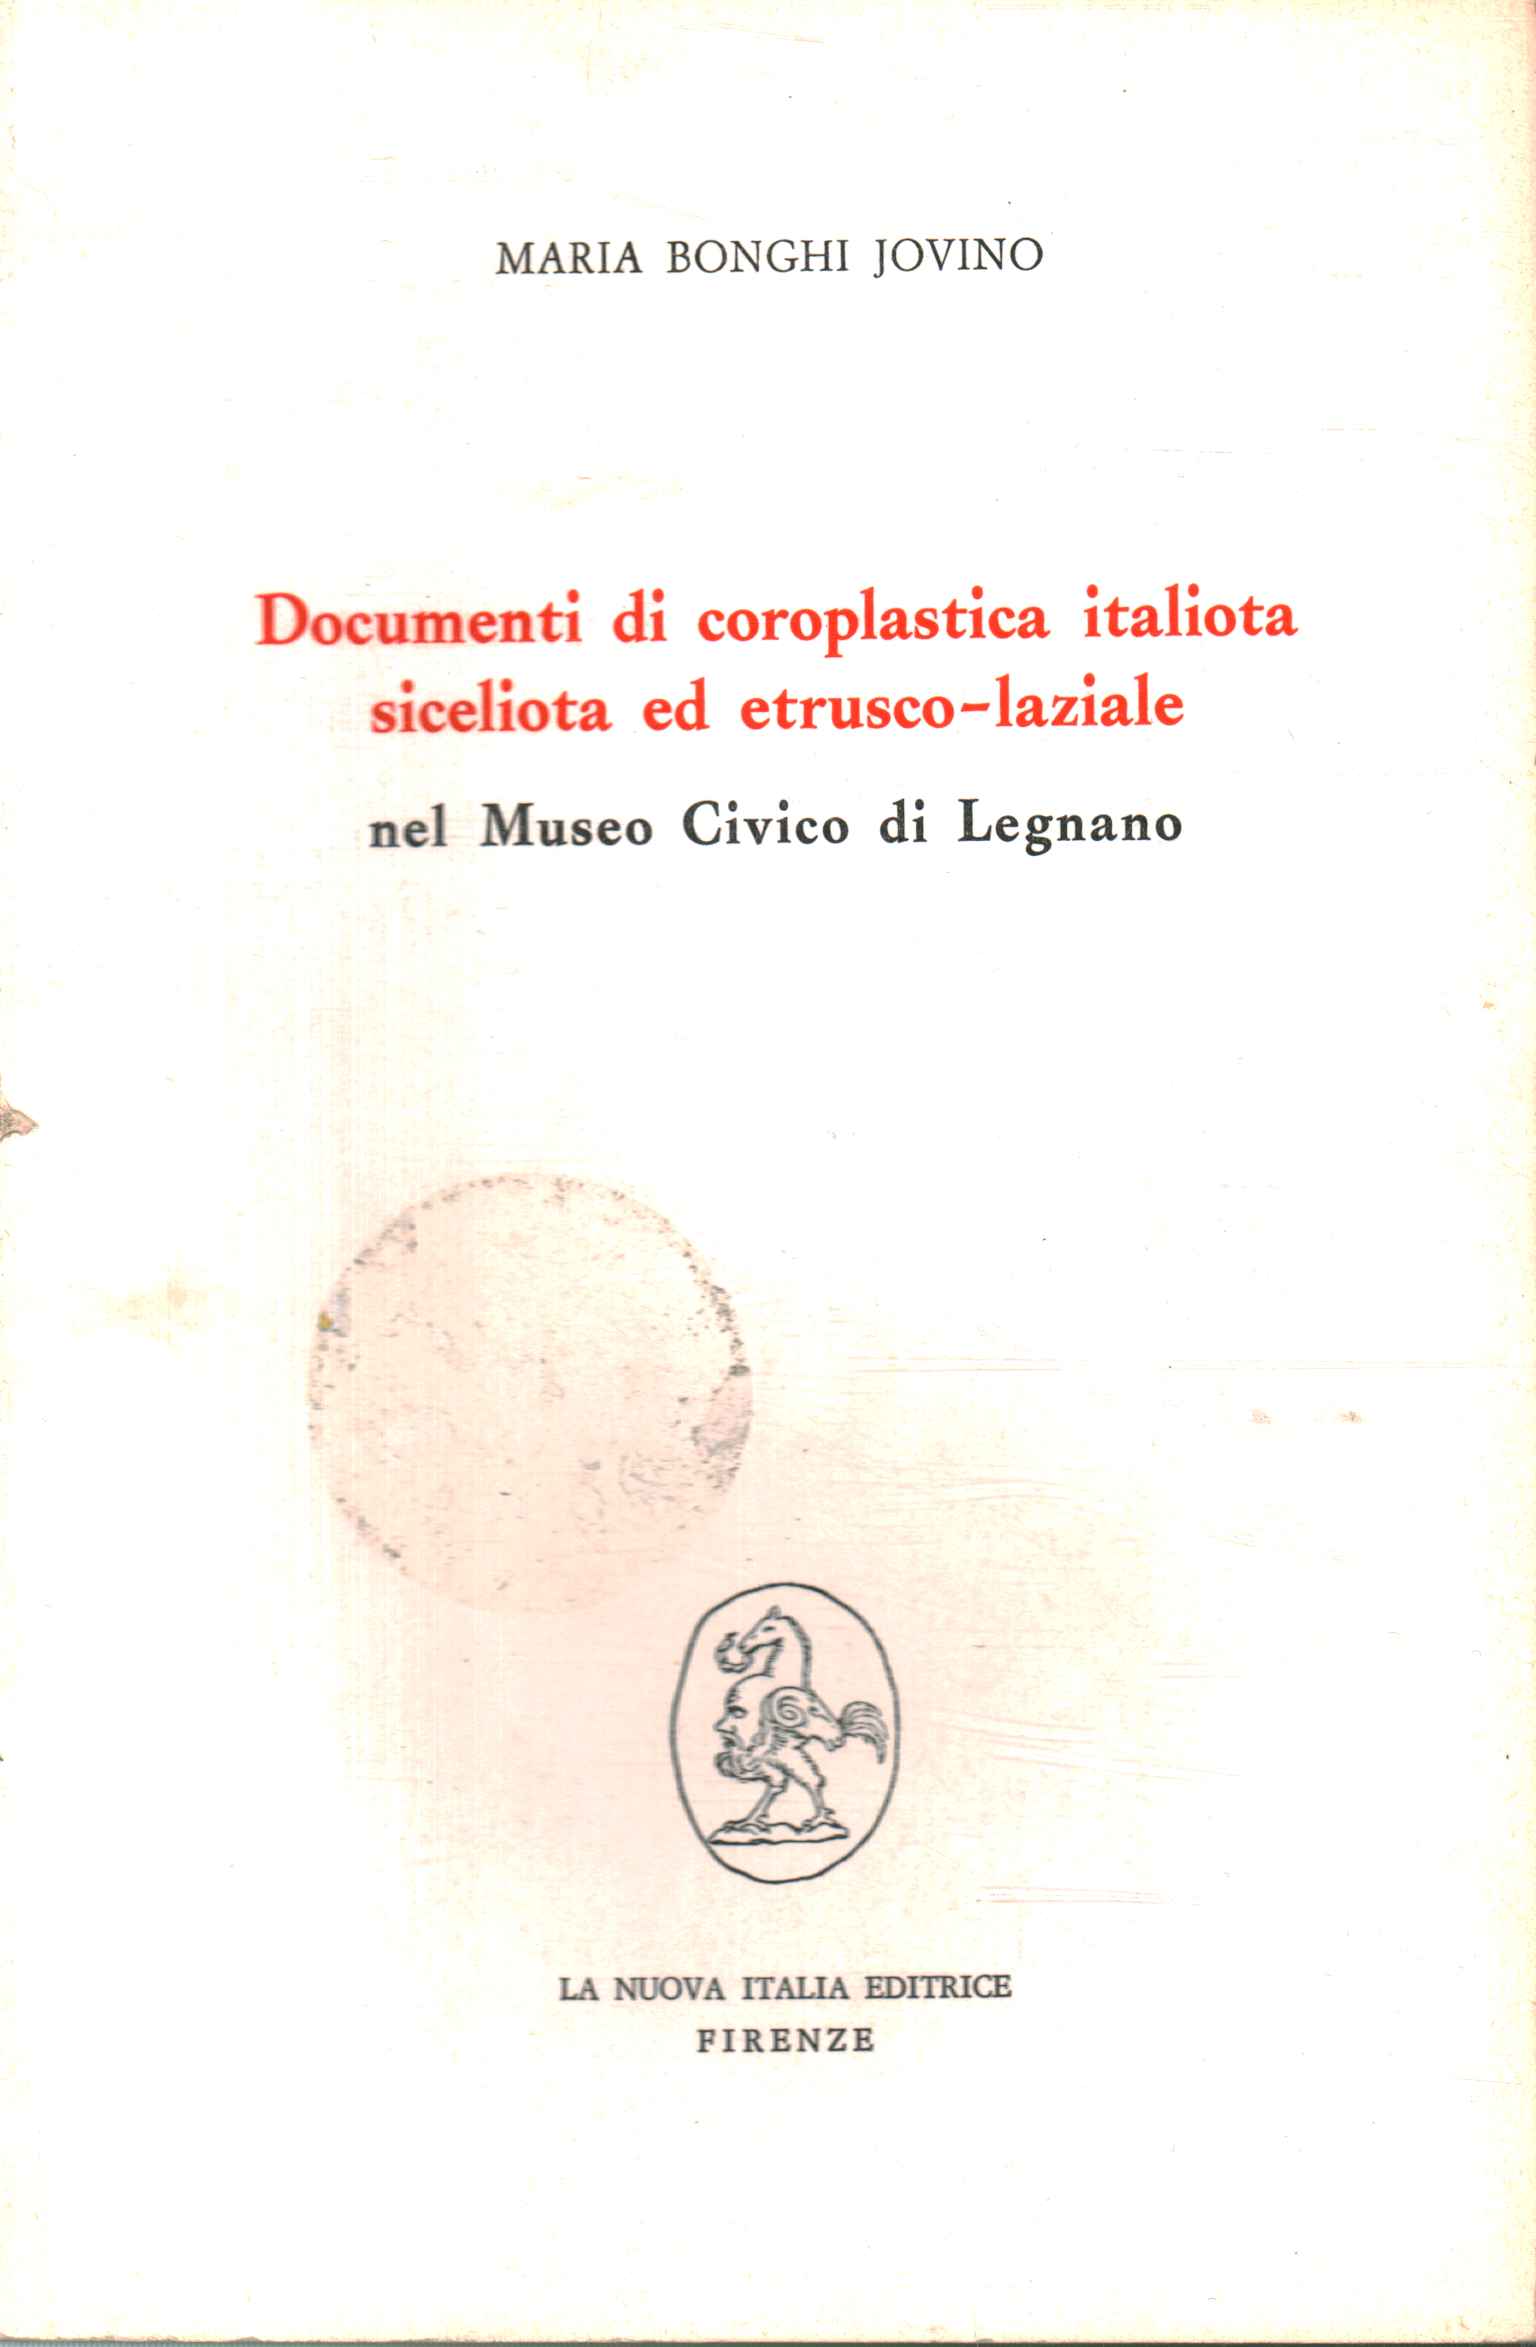 Documents de coroplastie sicilienne italienne